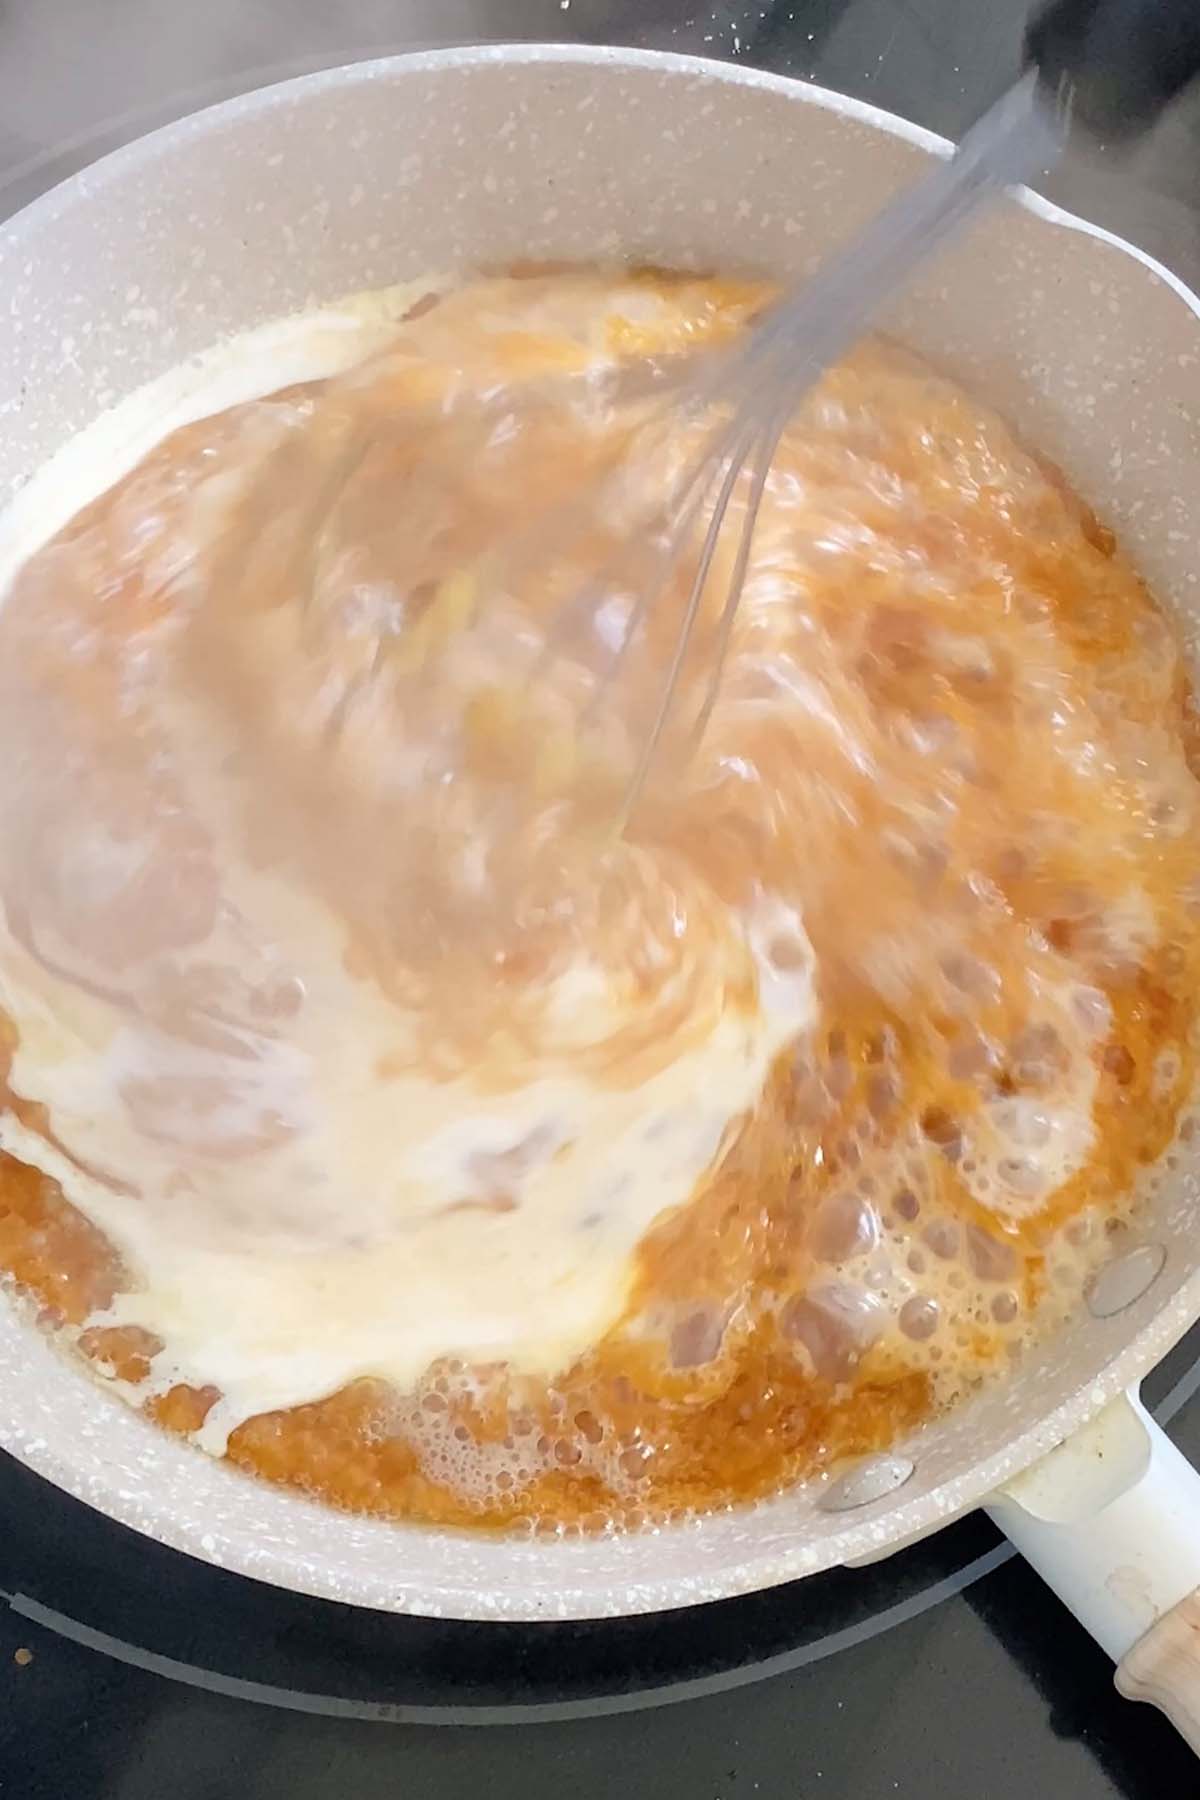 Cream is stirred into caramel sauce.